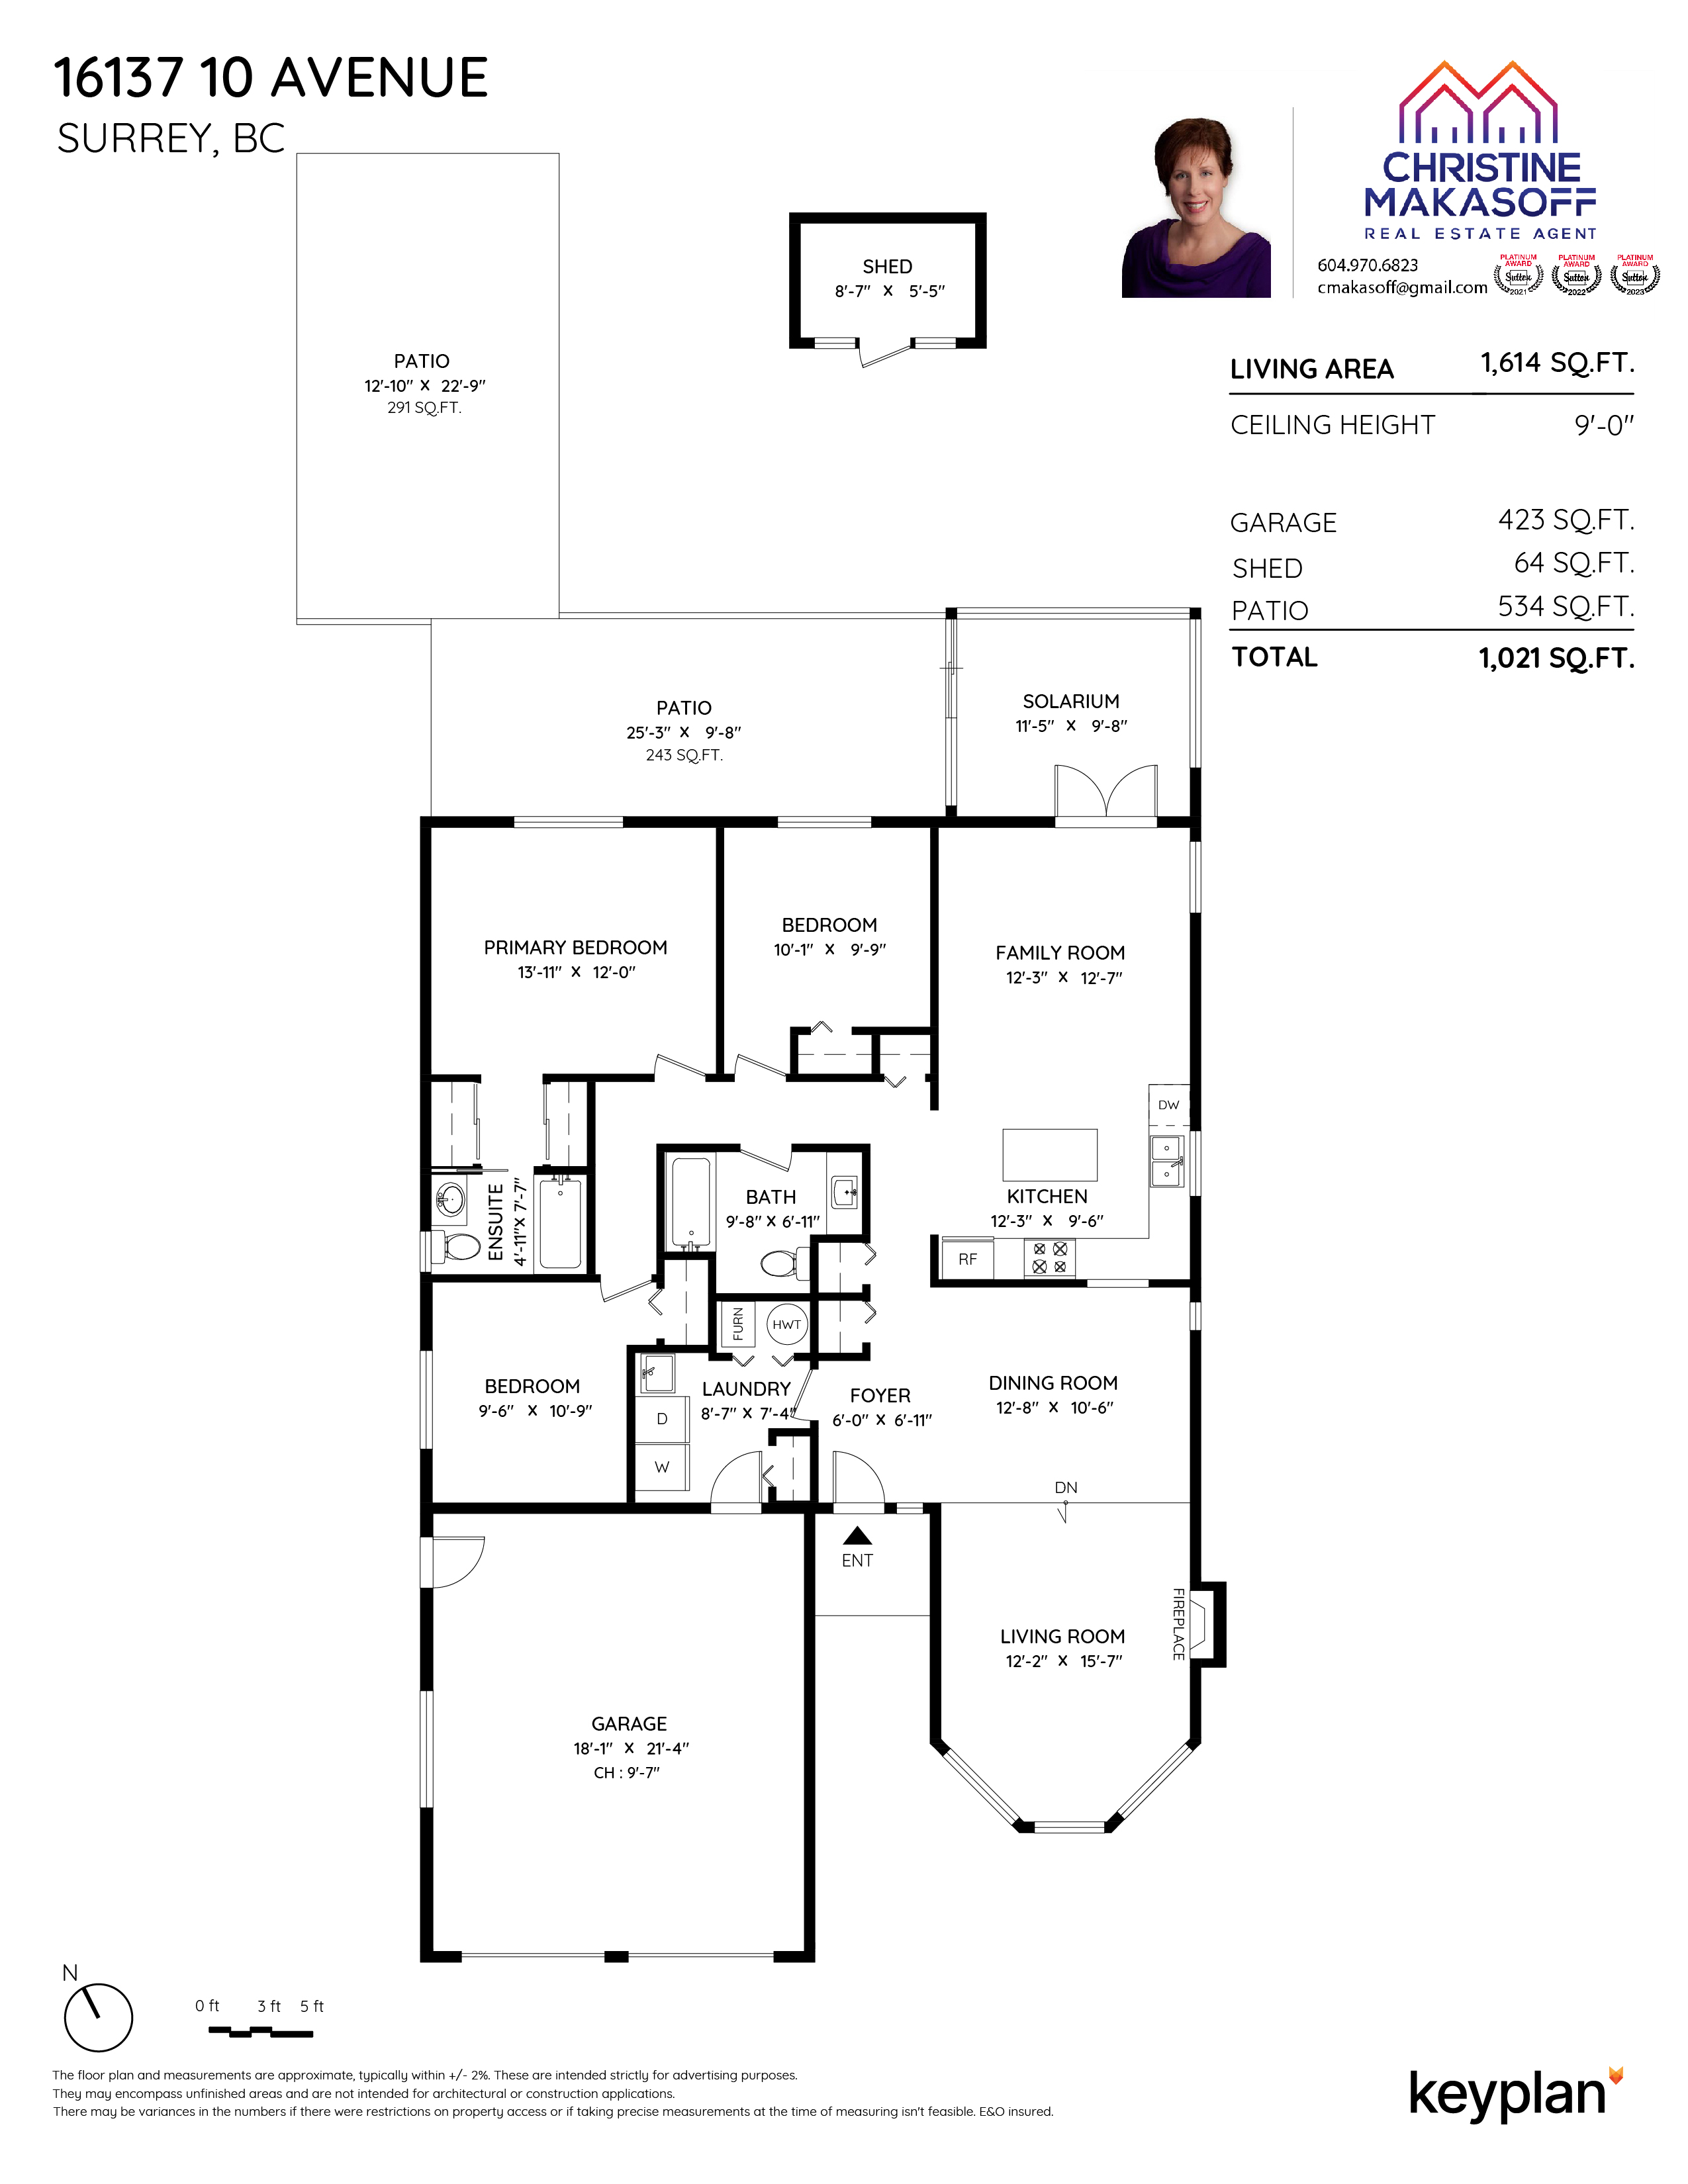 Christine Makasoff - 16137 10 Avenue, Surrey, BC, Canada | Floor Plan 1